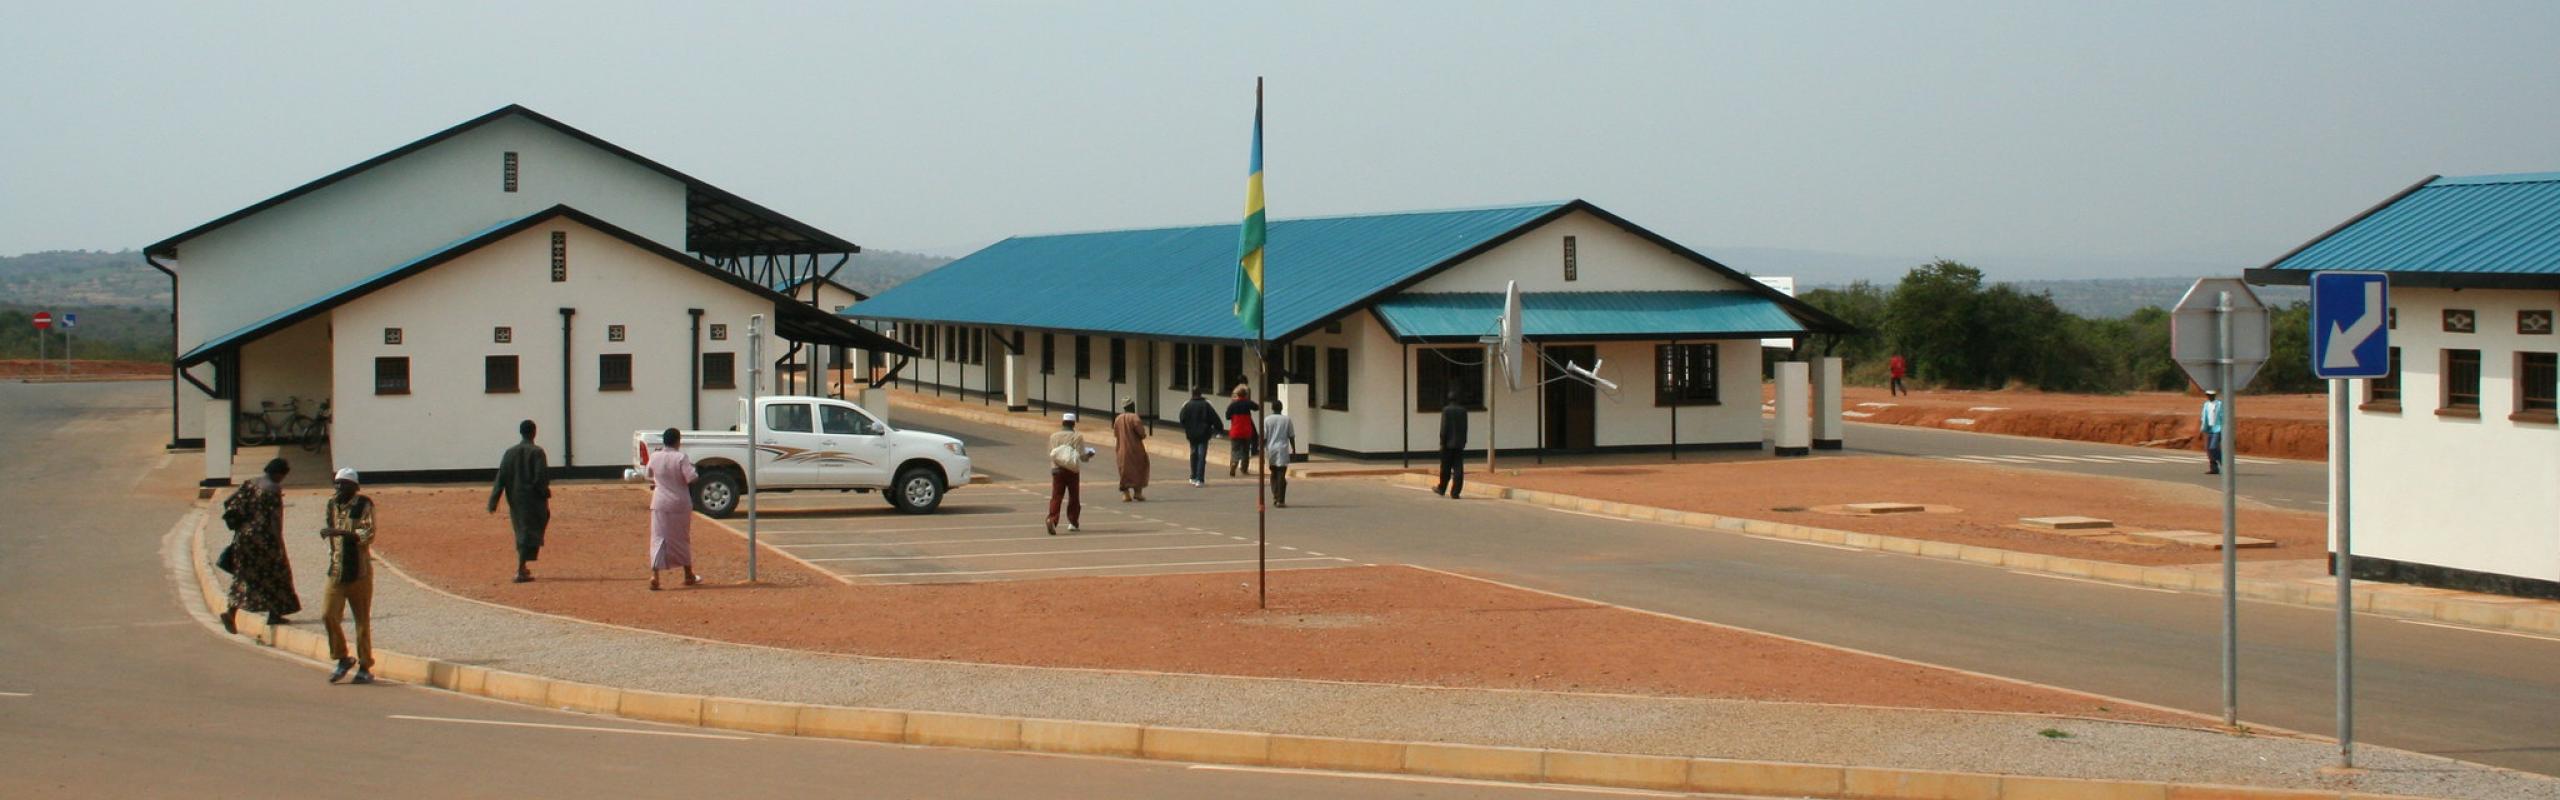 People walking outside customs buildings at the Burundi-Rwandan border.